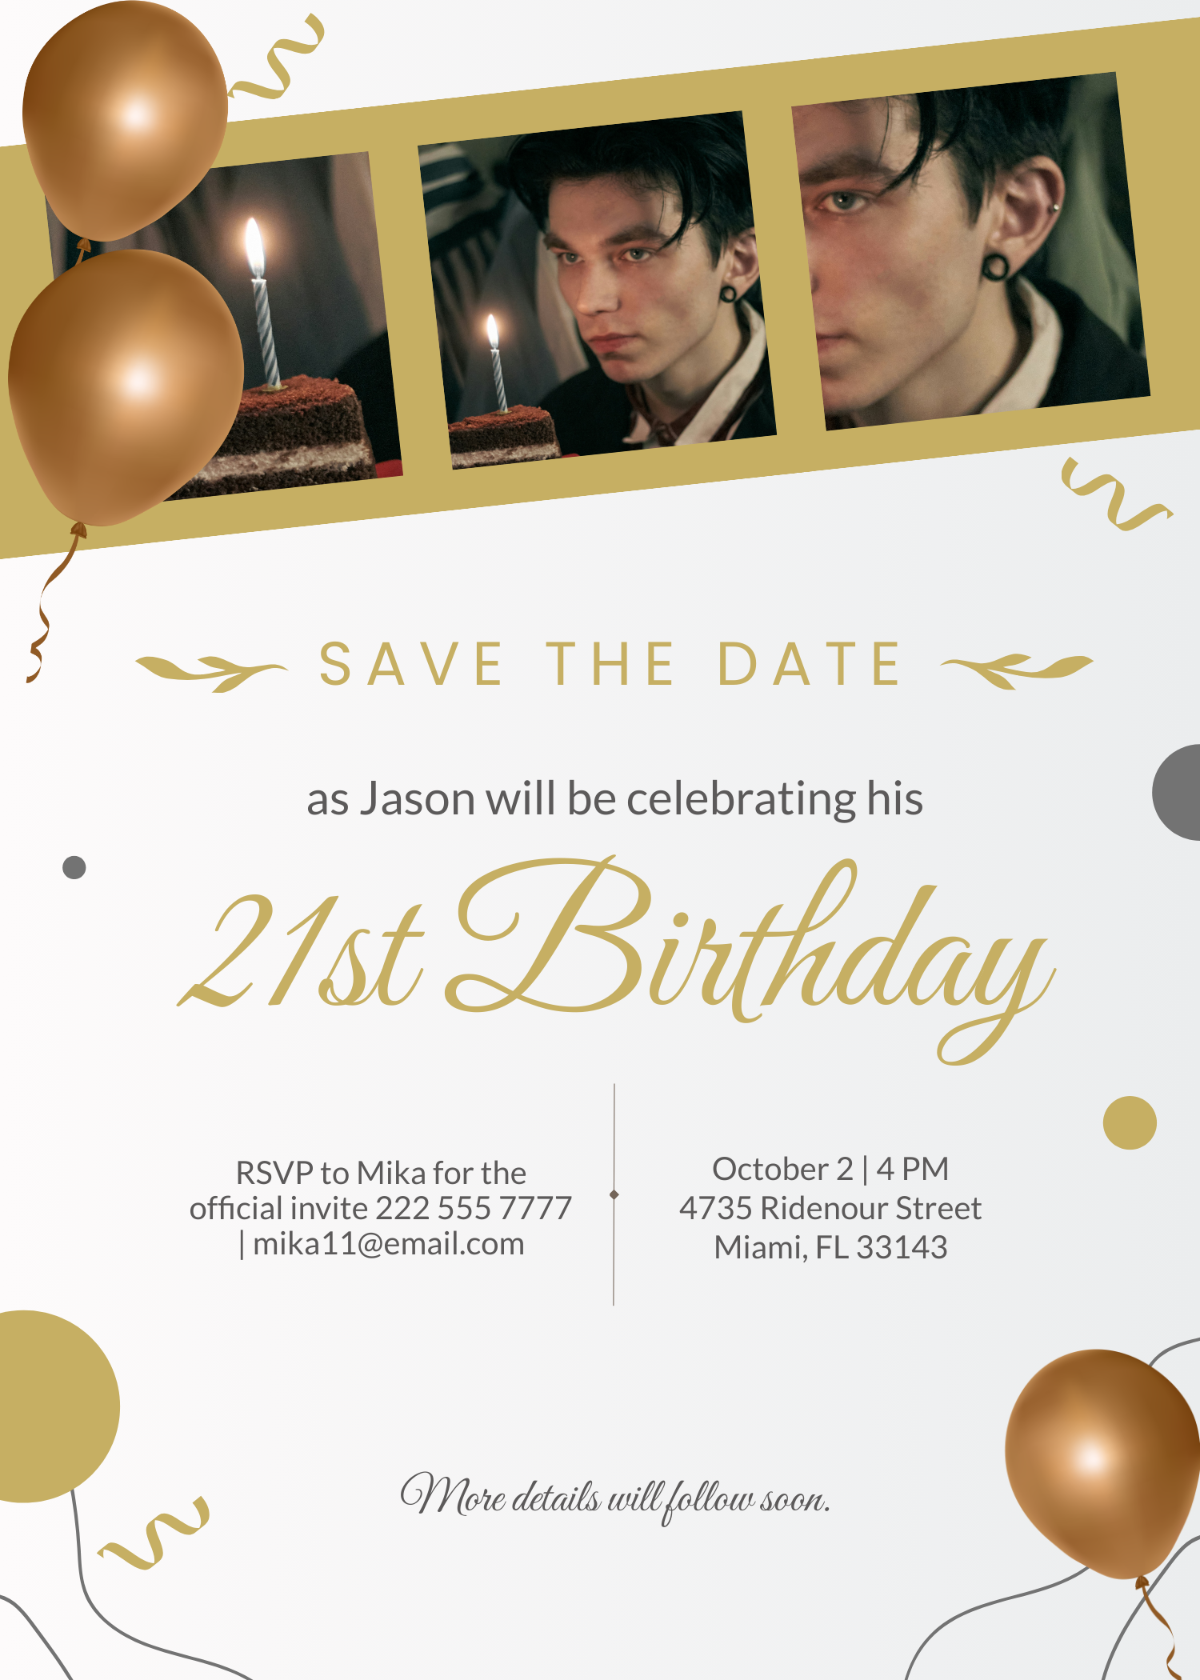 Save the Date 21st Birthday Invitation